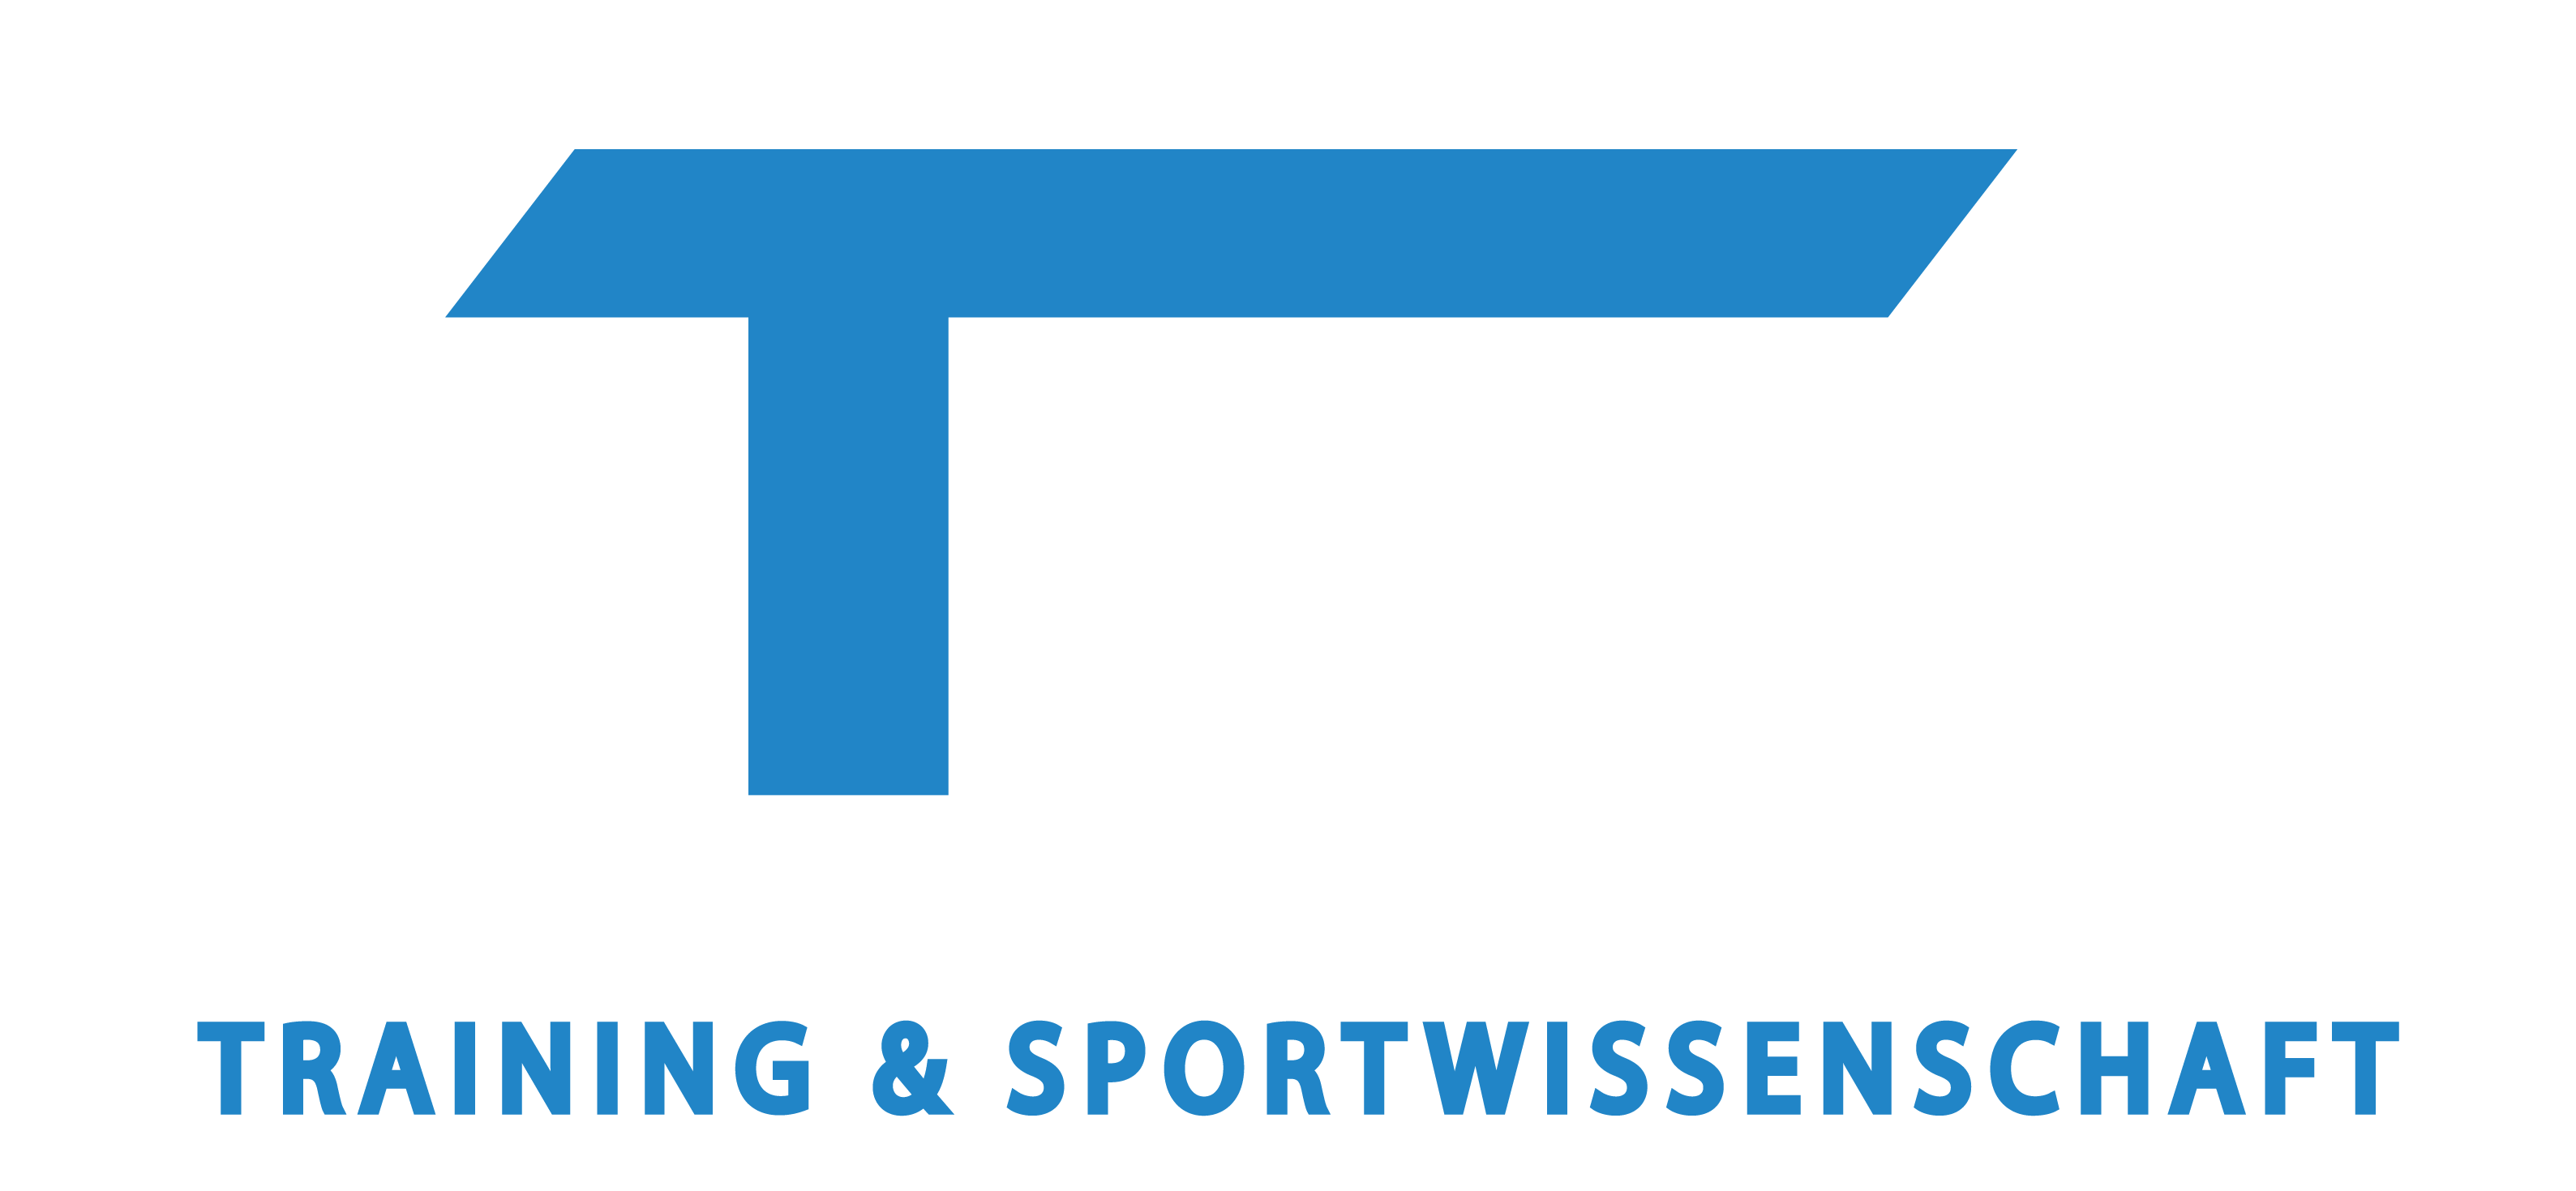 Thomas Strobl – Personal Trainer